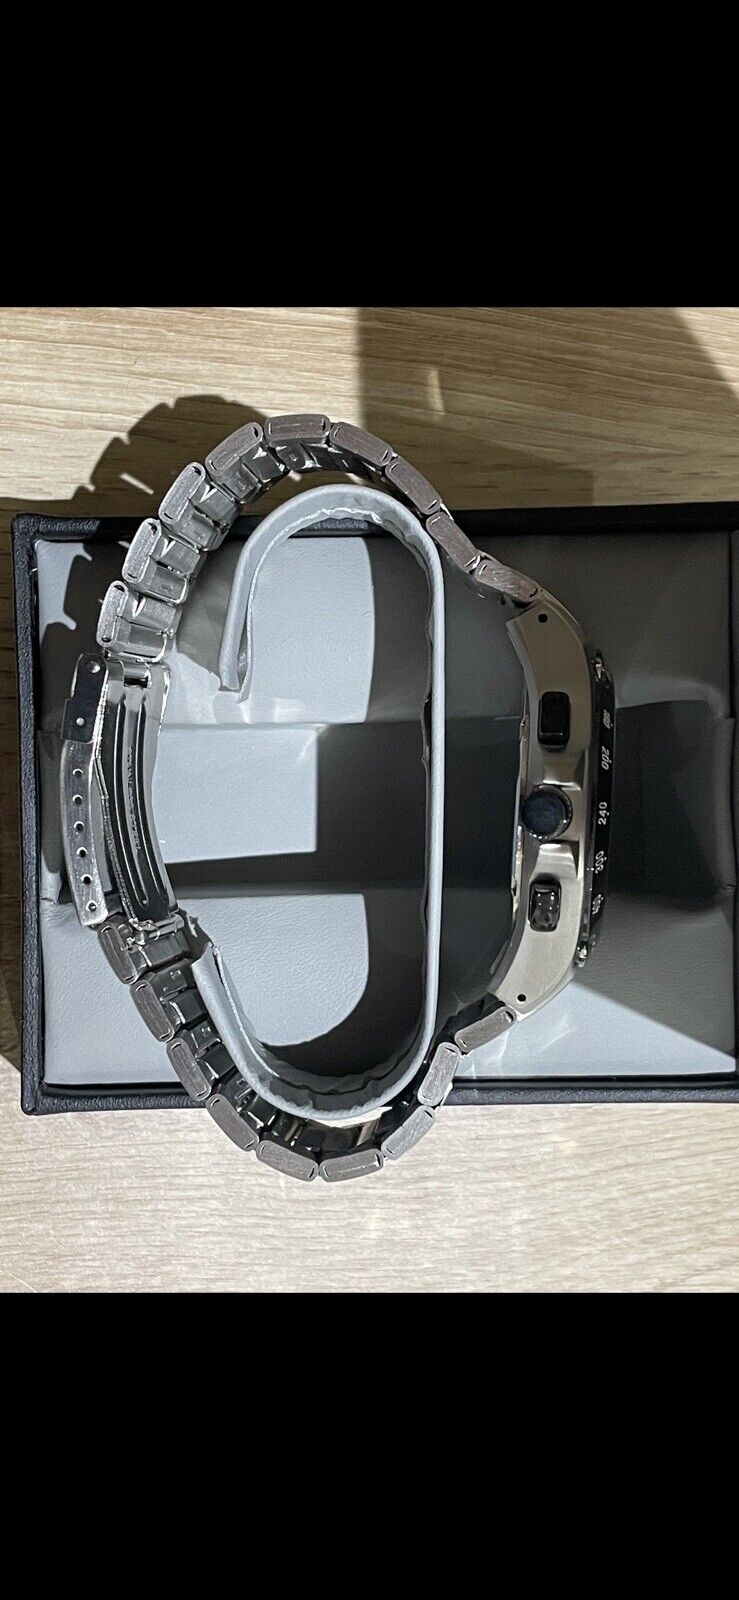 Mens Fusion Chrinograph Quartz Watch FUS10. - Westies Watches